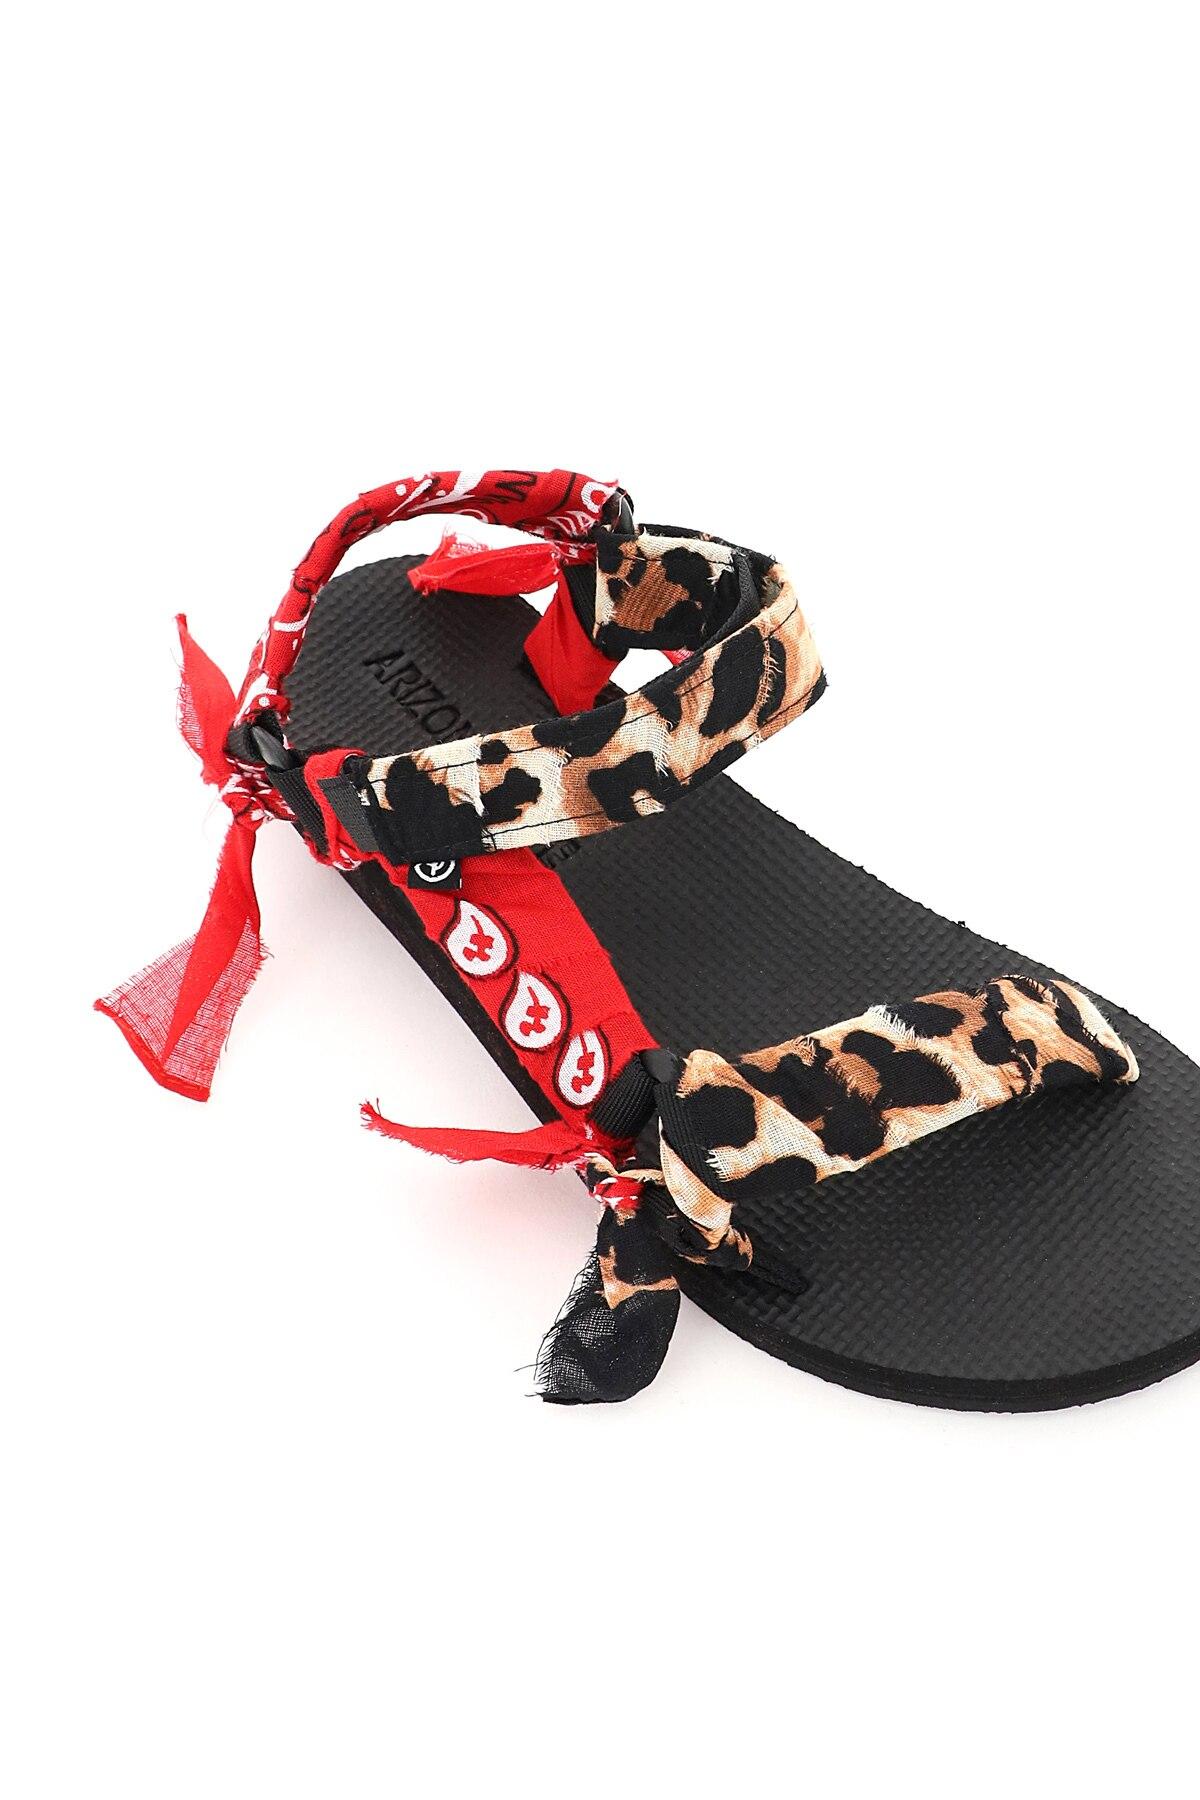 ARIZONA LOVE Bandana Trekky Sandals 37 Cotton in Red,Brown,Black 